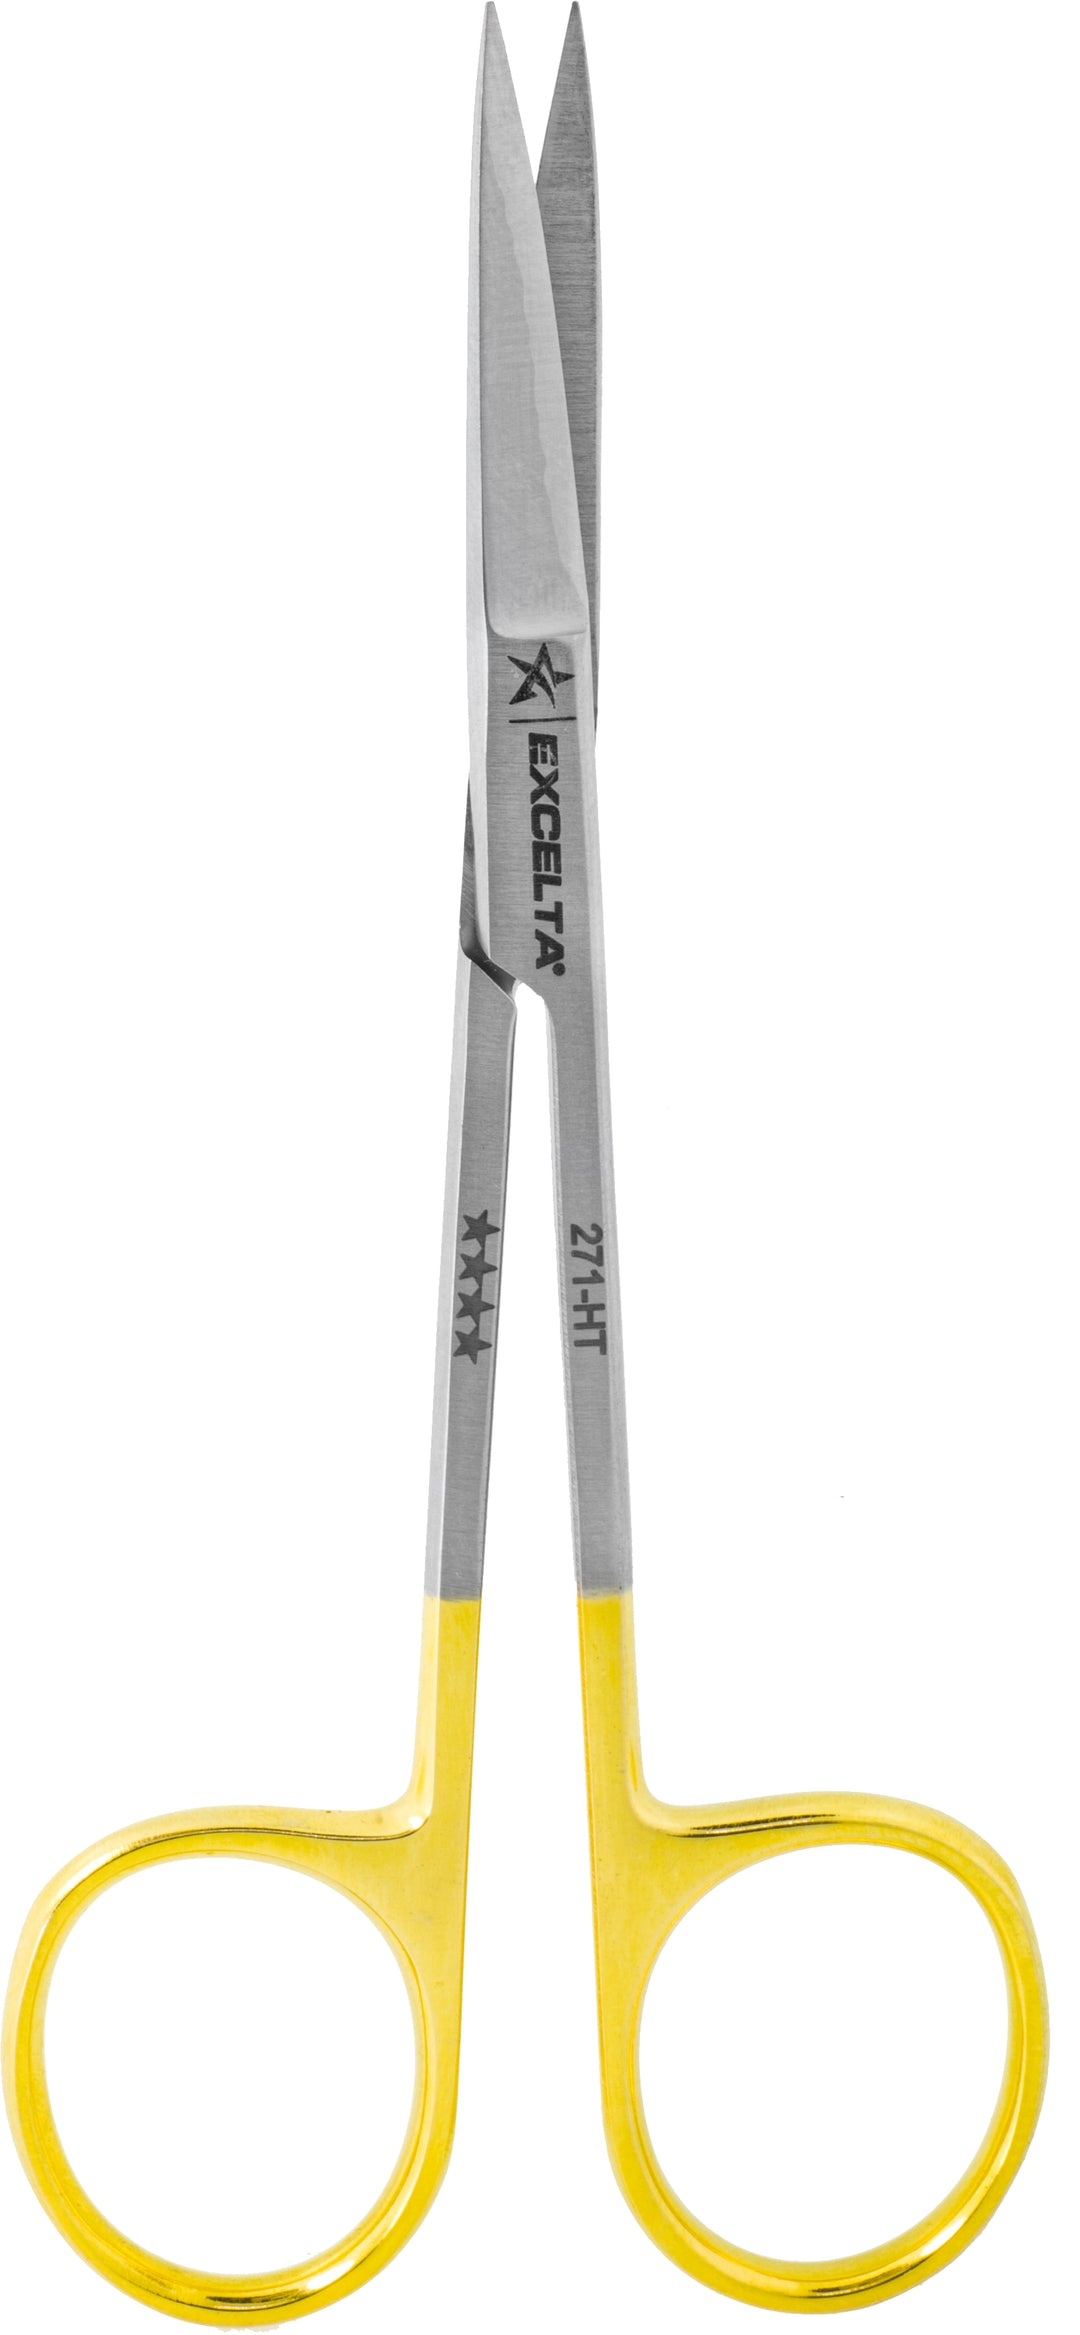 Excelta 271-HT Scissors - Very Fine 1.25" Blade - SS - Oal 4.5" - W/Carbide Blades